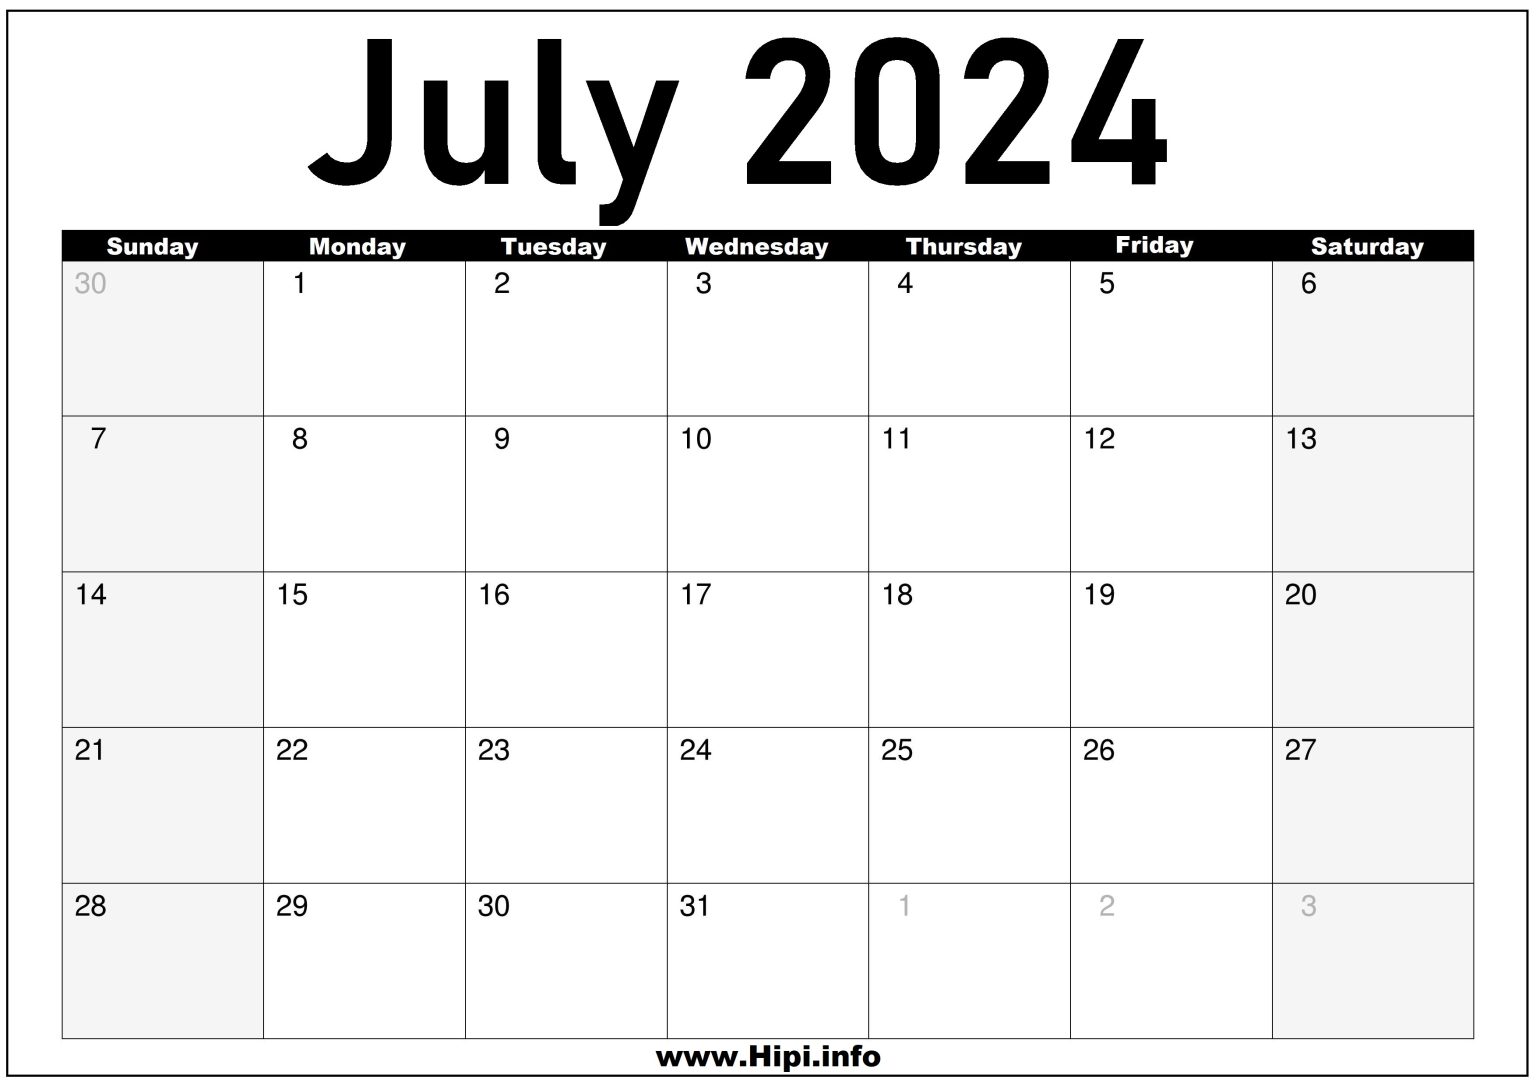 July 2024 Calendar Monthly Hipi.info